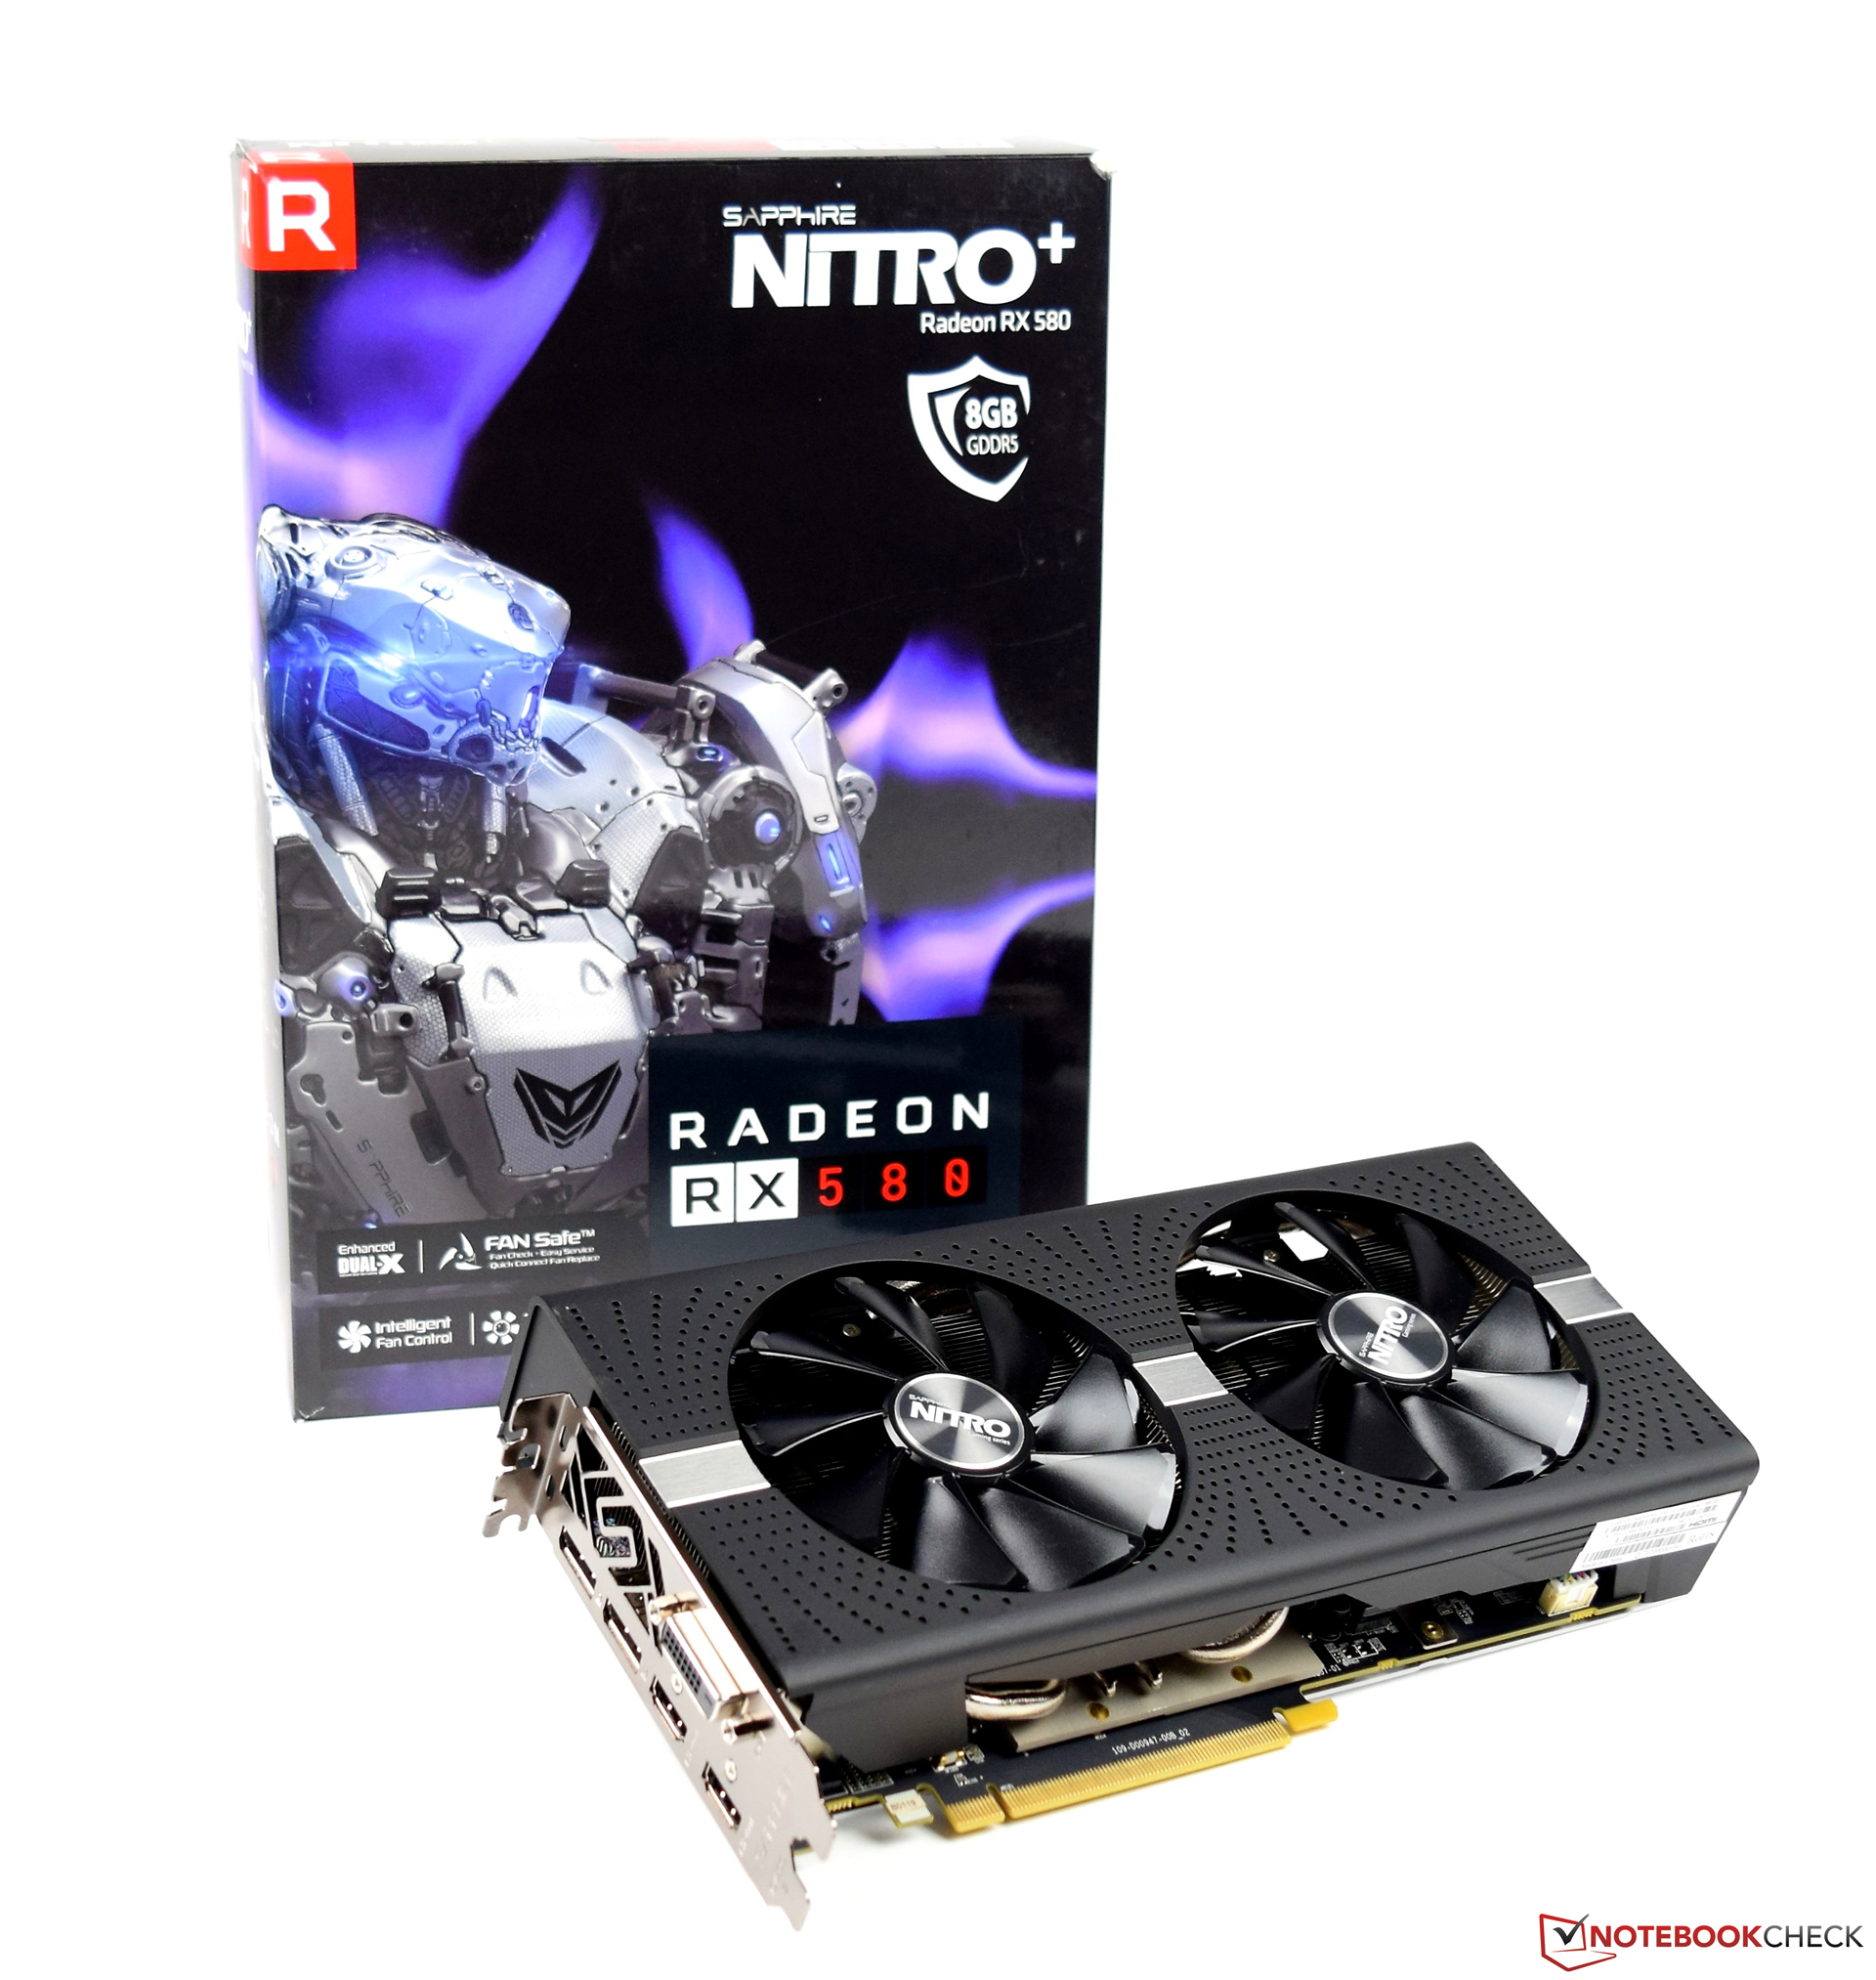 Sapphire Nitro+ Radeon RX 580 Desktop Graphics Card Review ...